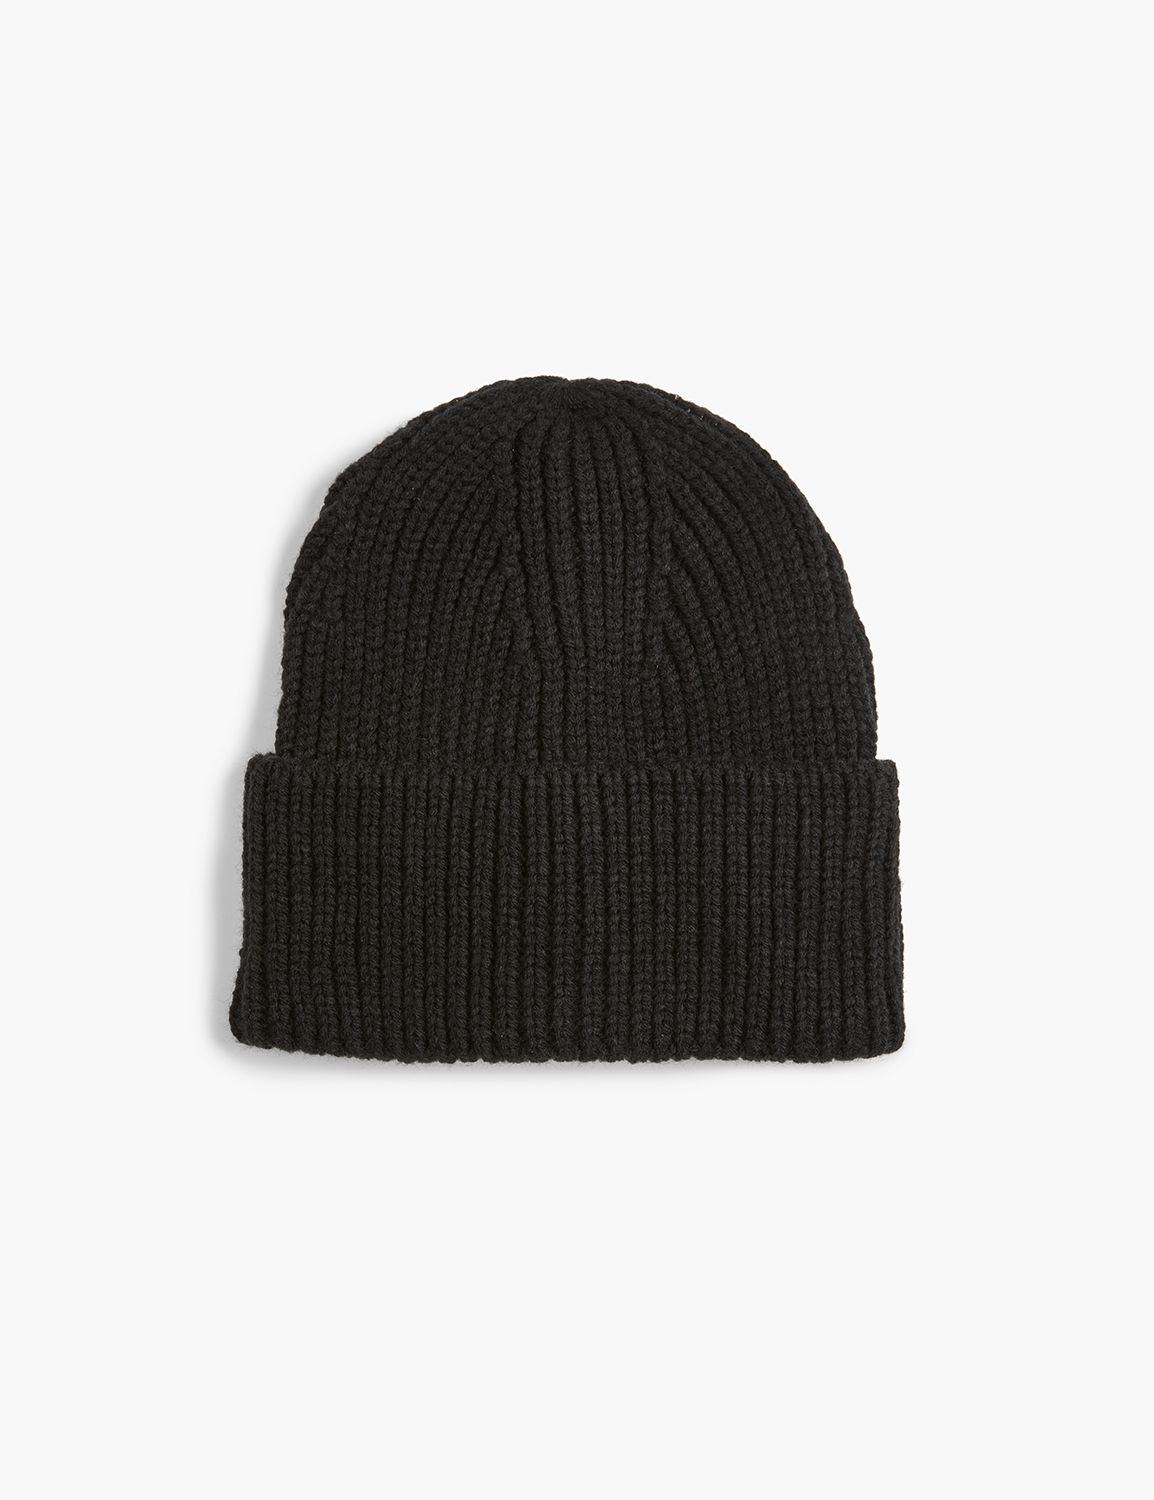 Black Beanie Hat | LaneBryant